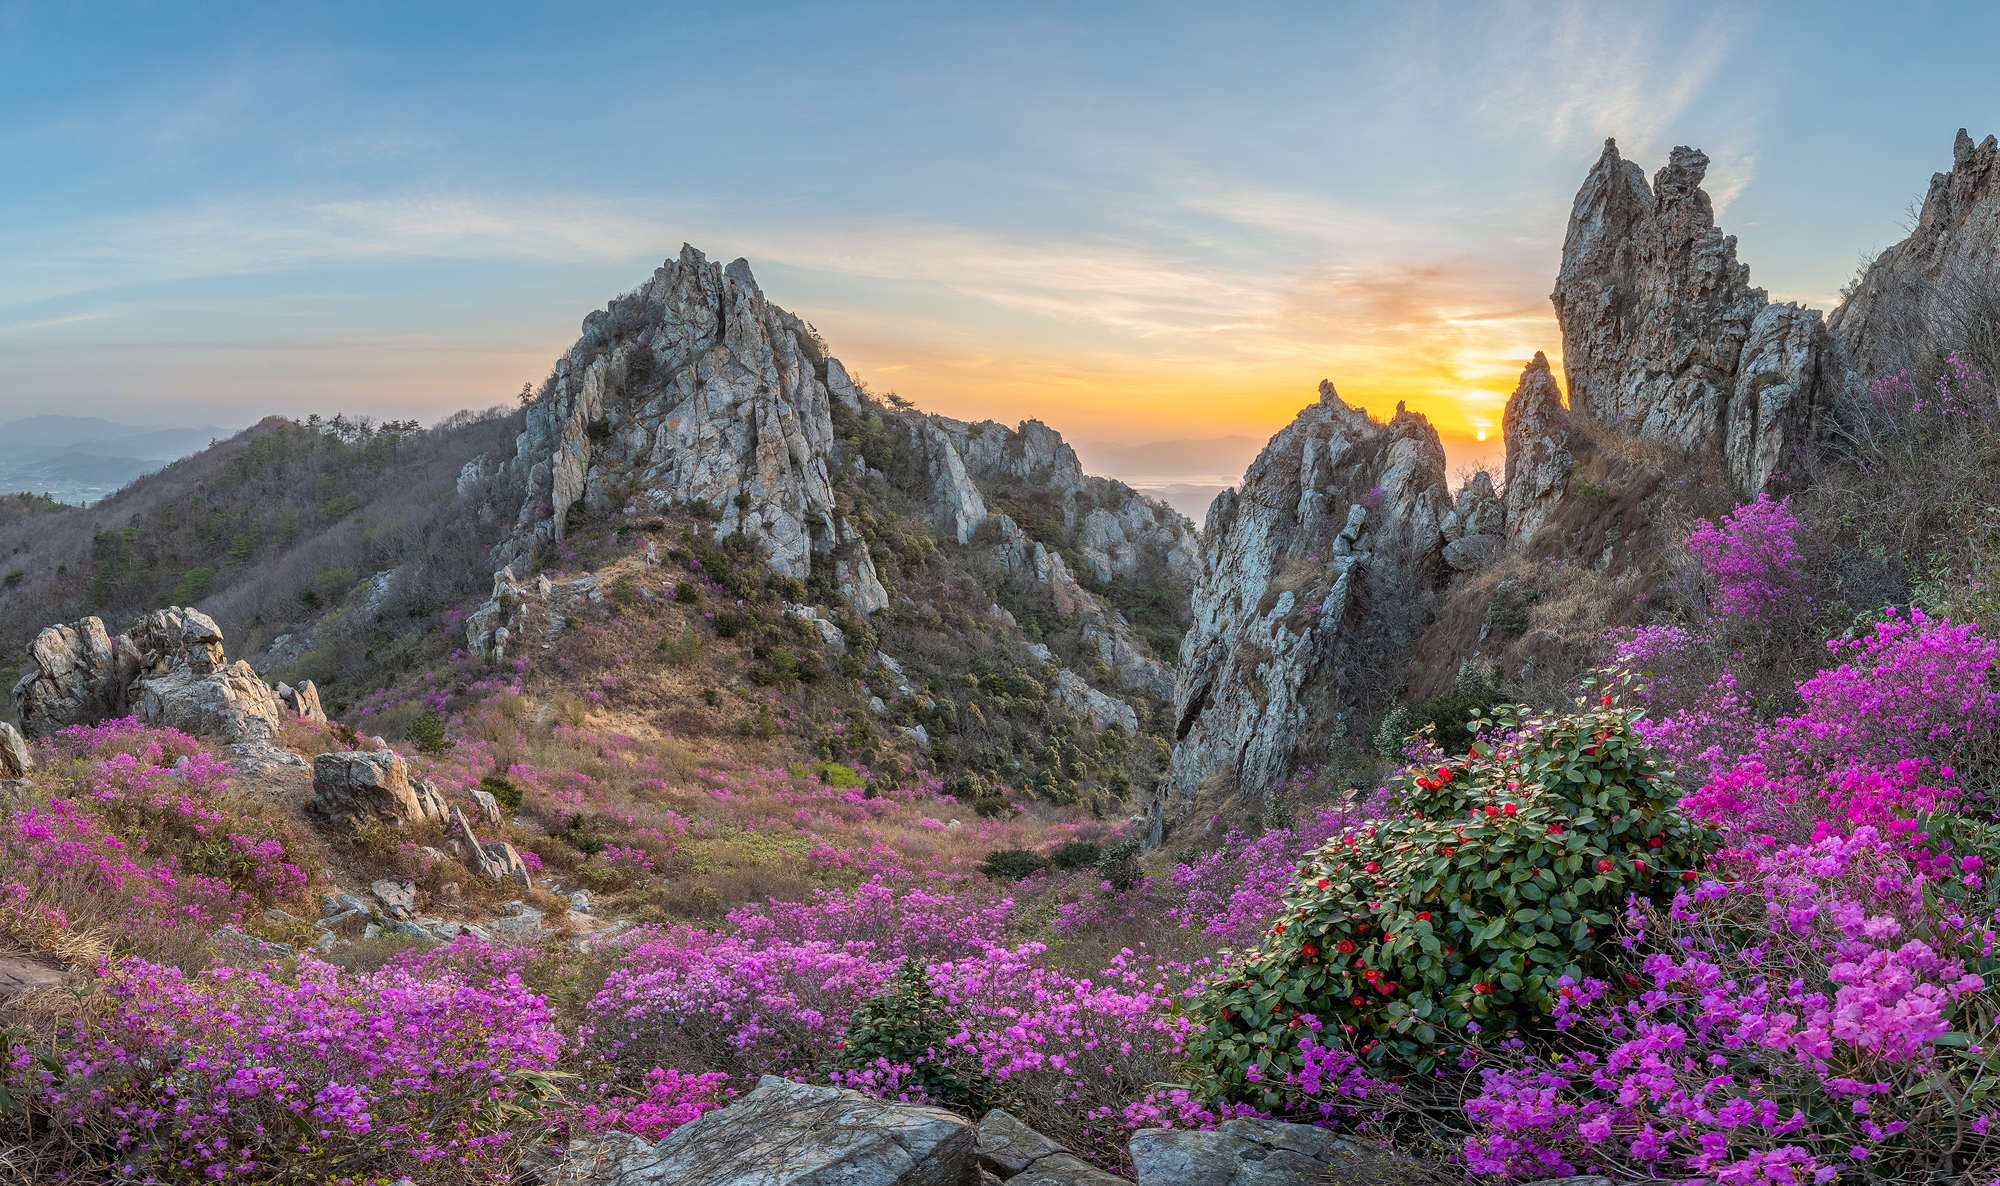 General 2000x1186 Jaeyoun Ryu landscape hills rocks flowers pink plants spring sky sunset nature